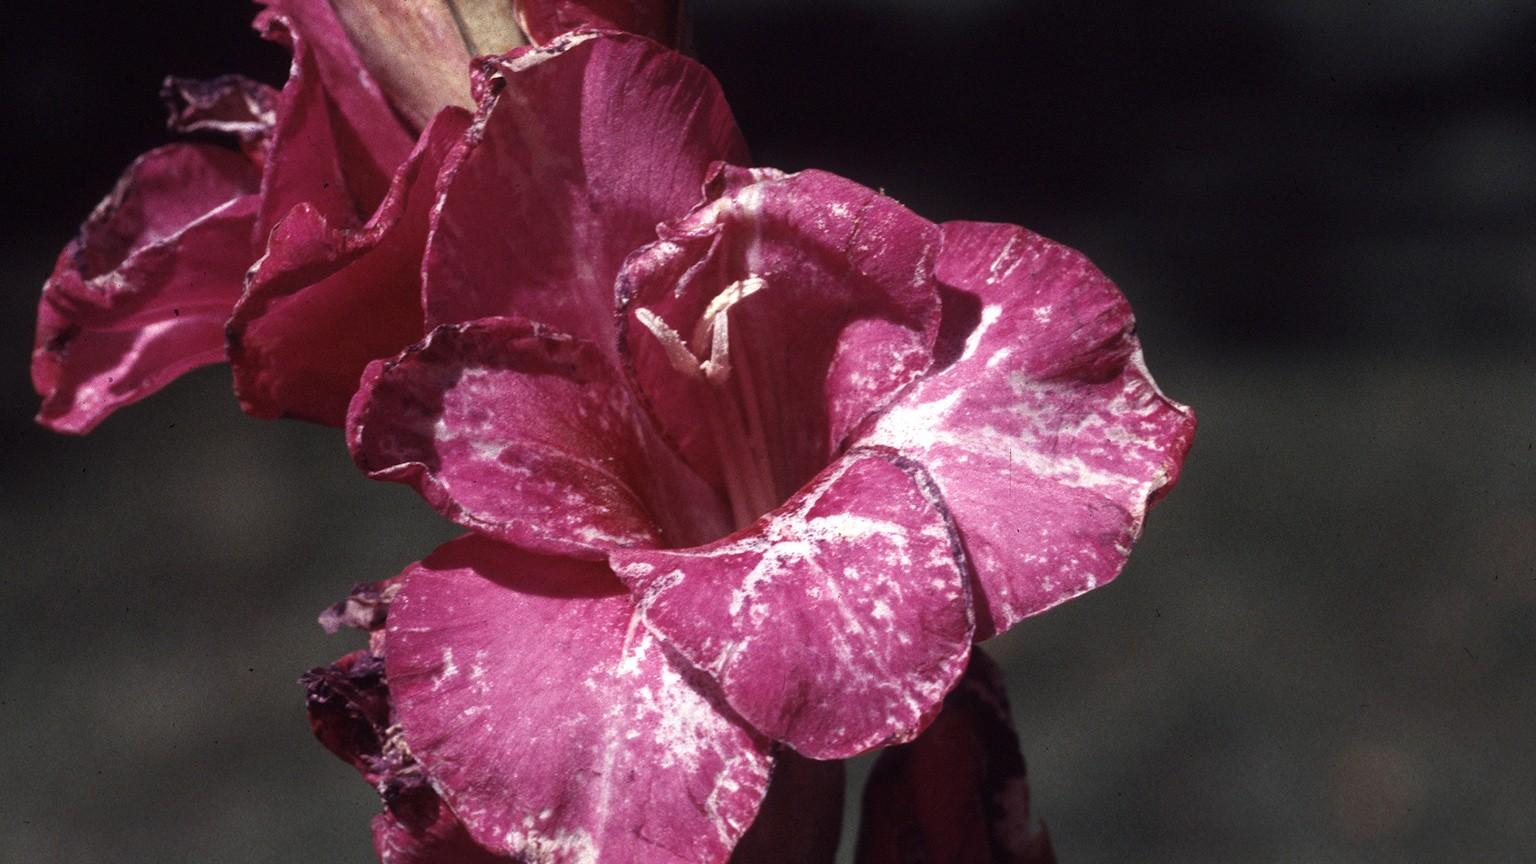 thrips damage on gladiolus flowers